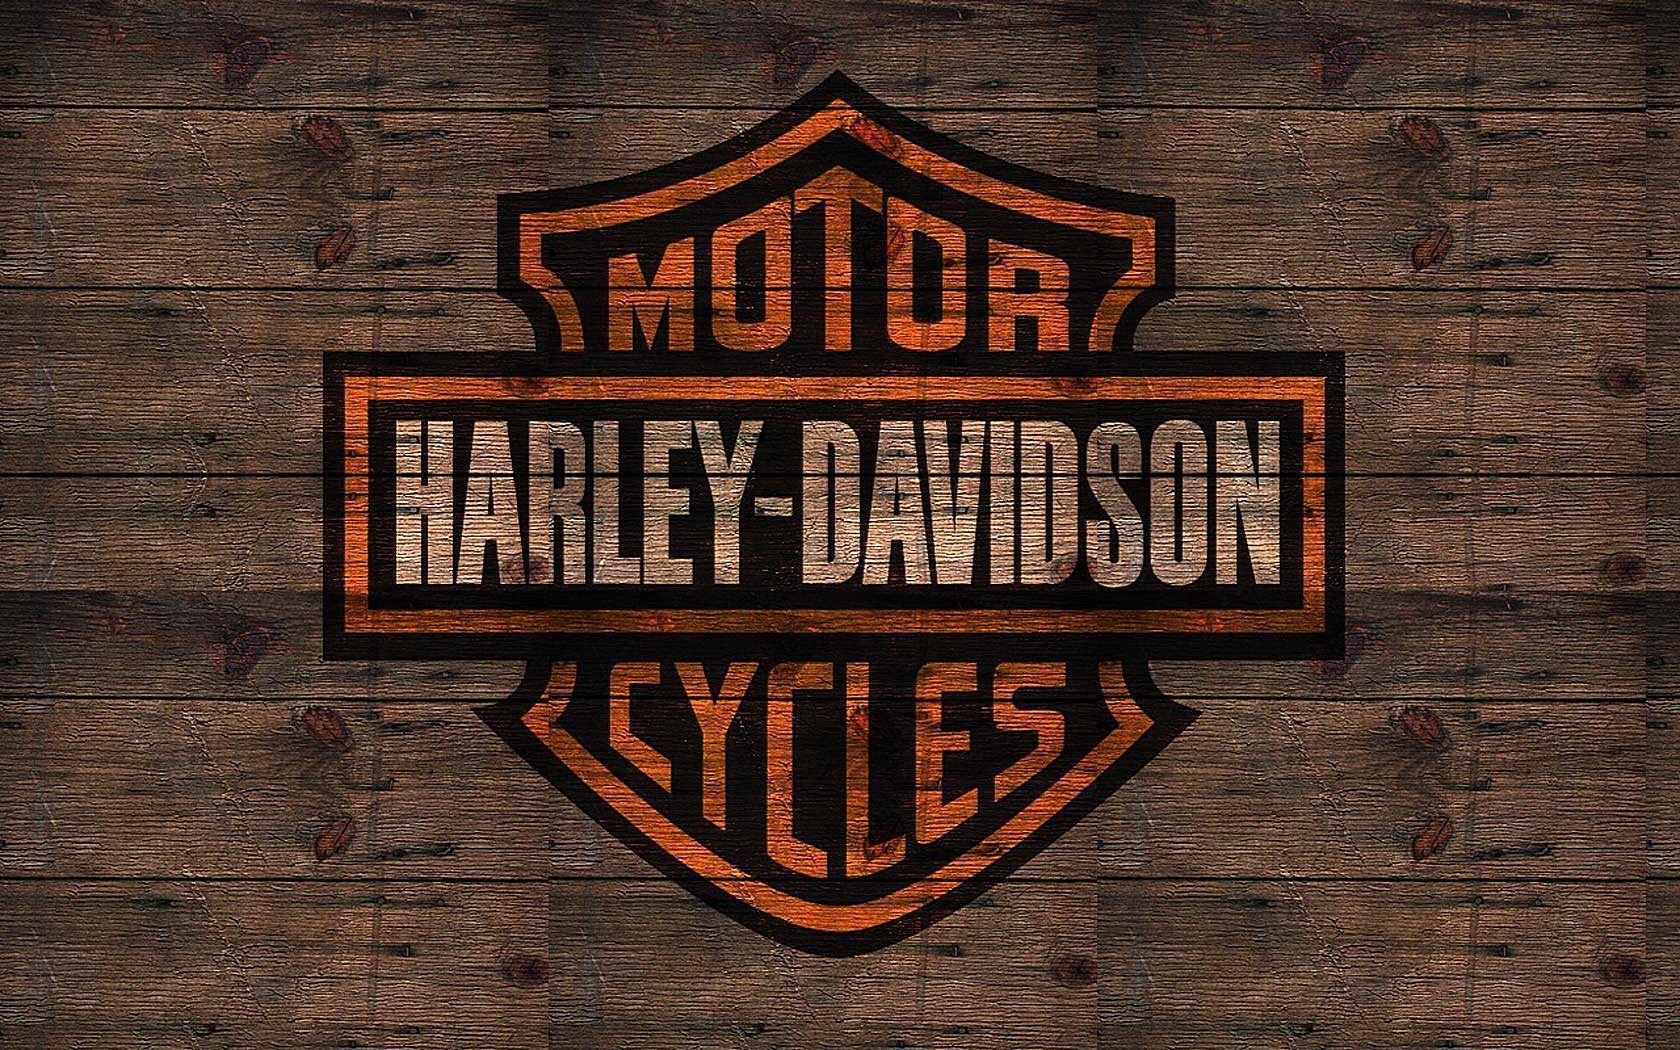 Harley Davidson Wallpaper for Desktop